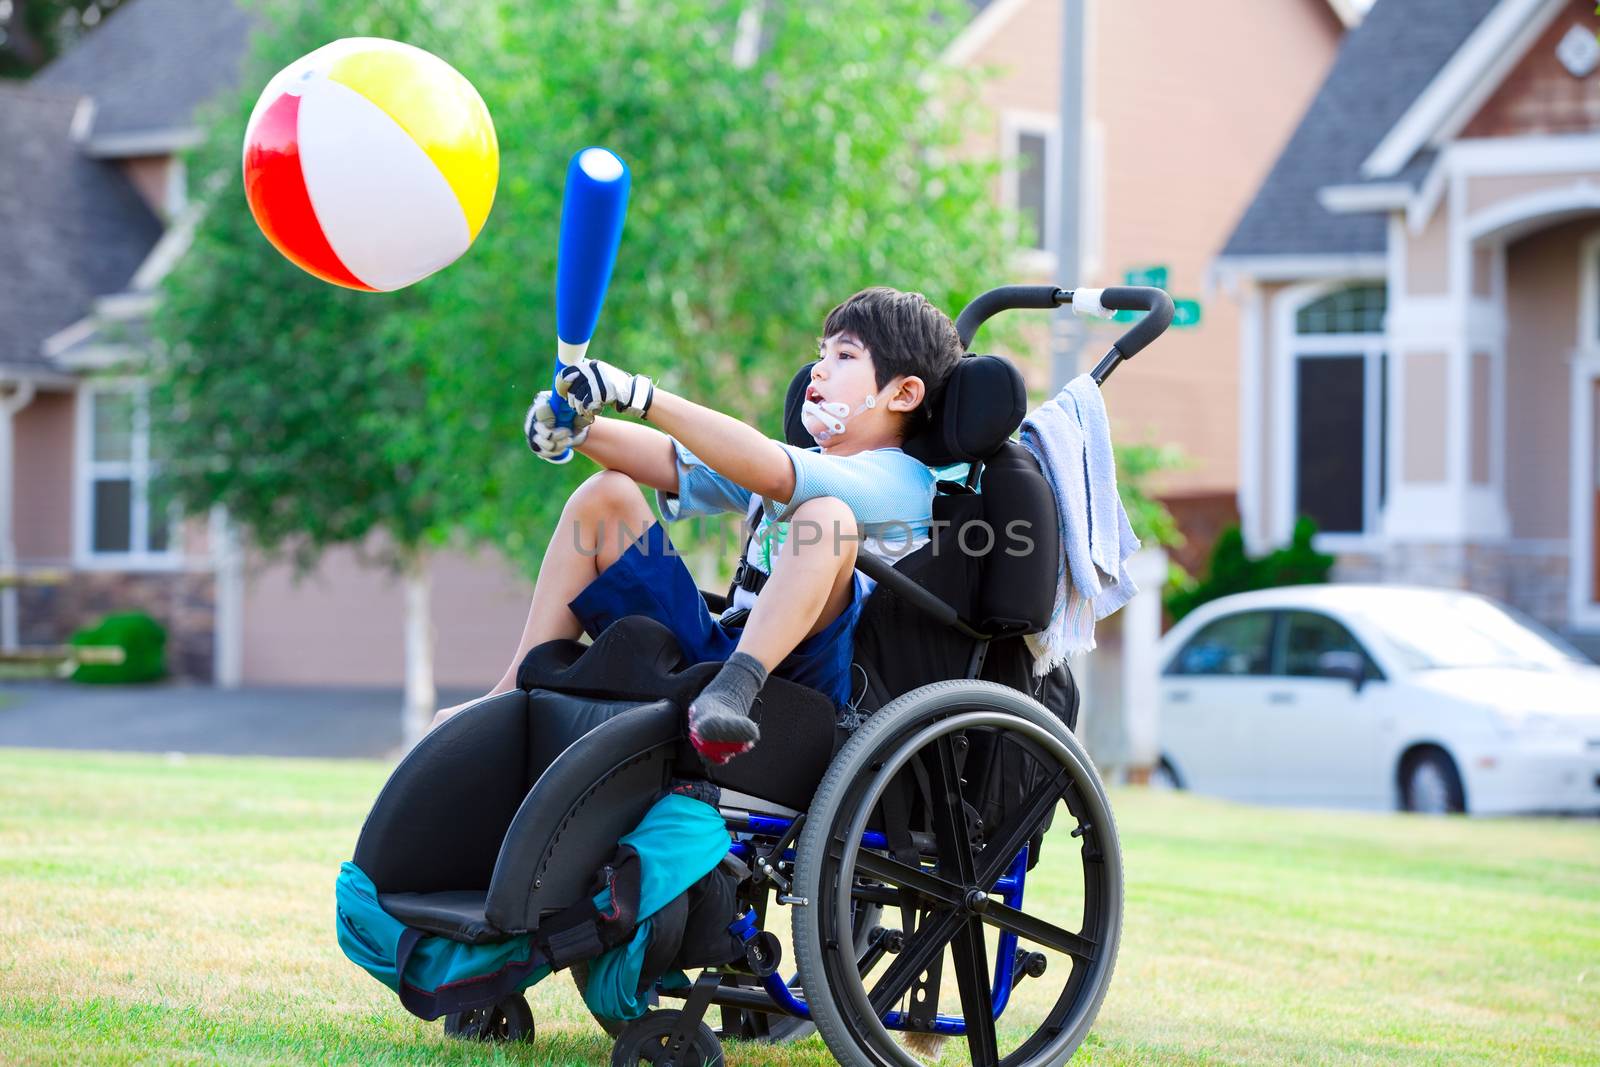 Disabled boy hitting ball with bat at park by jarenwicklund